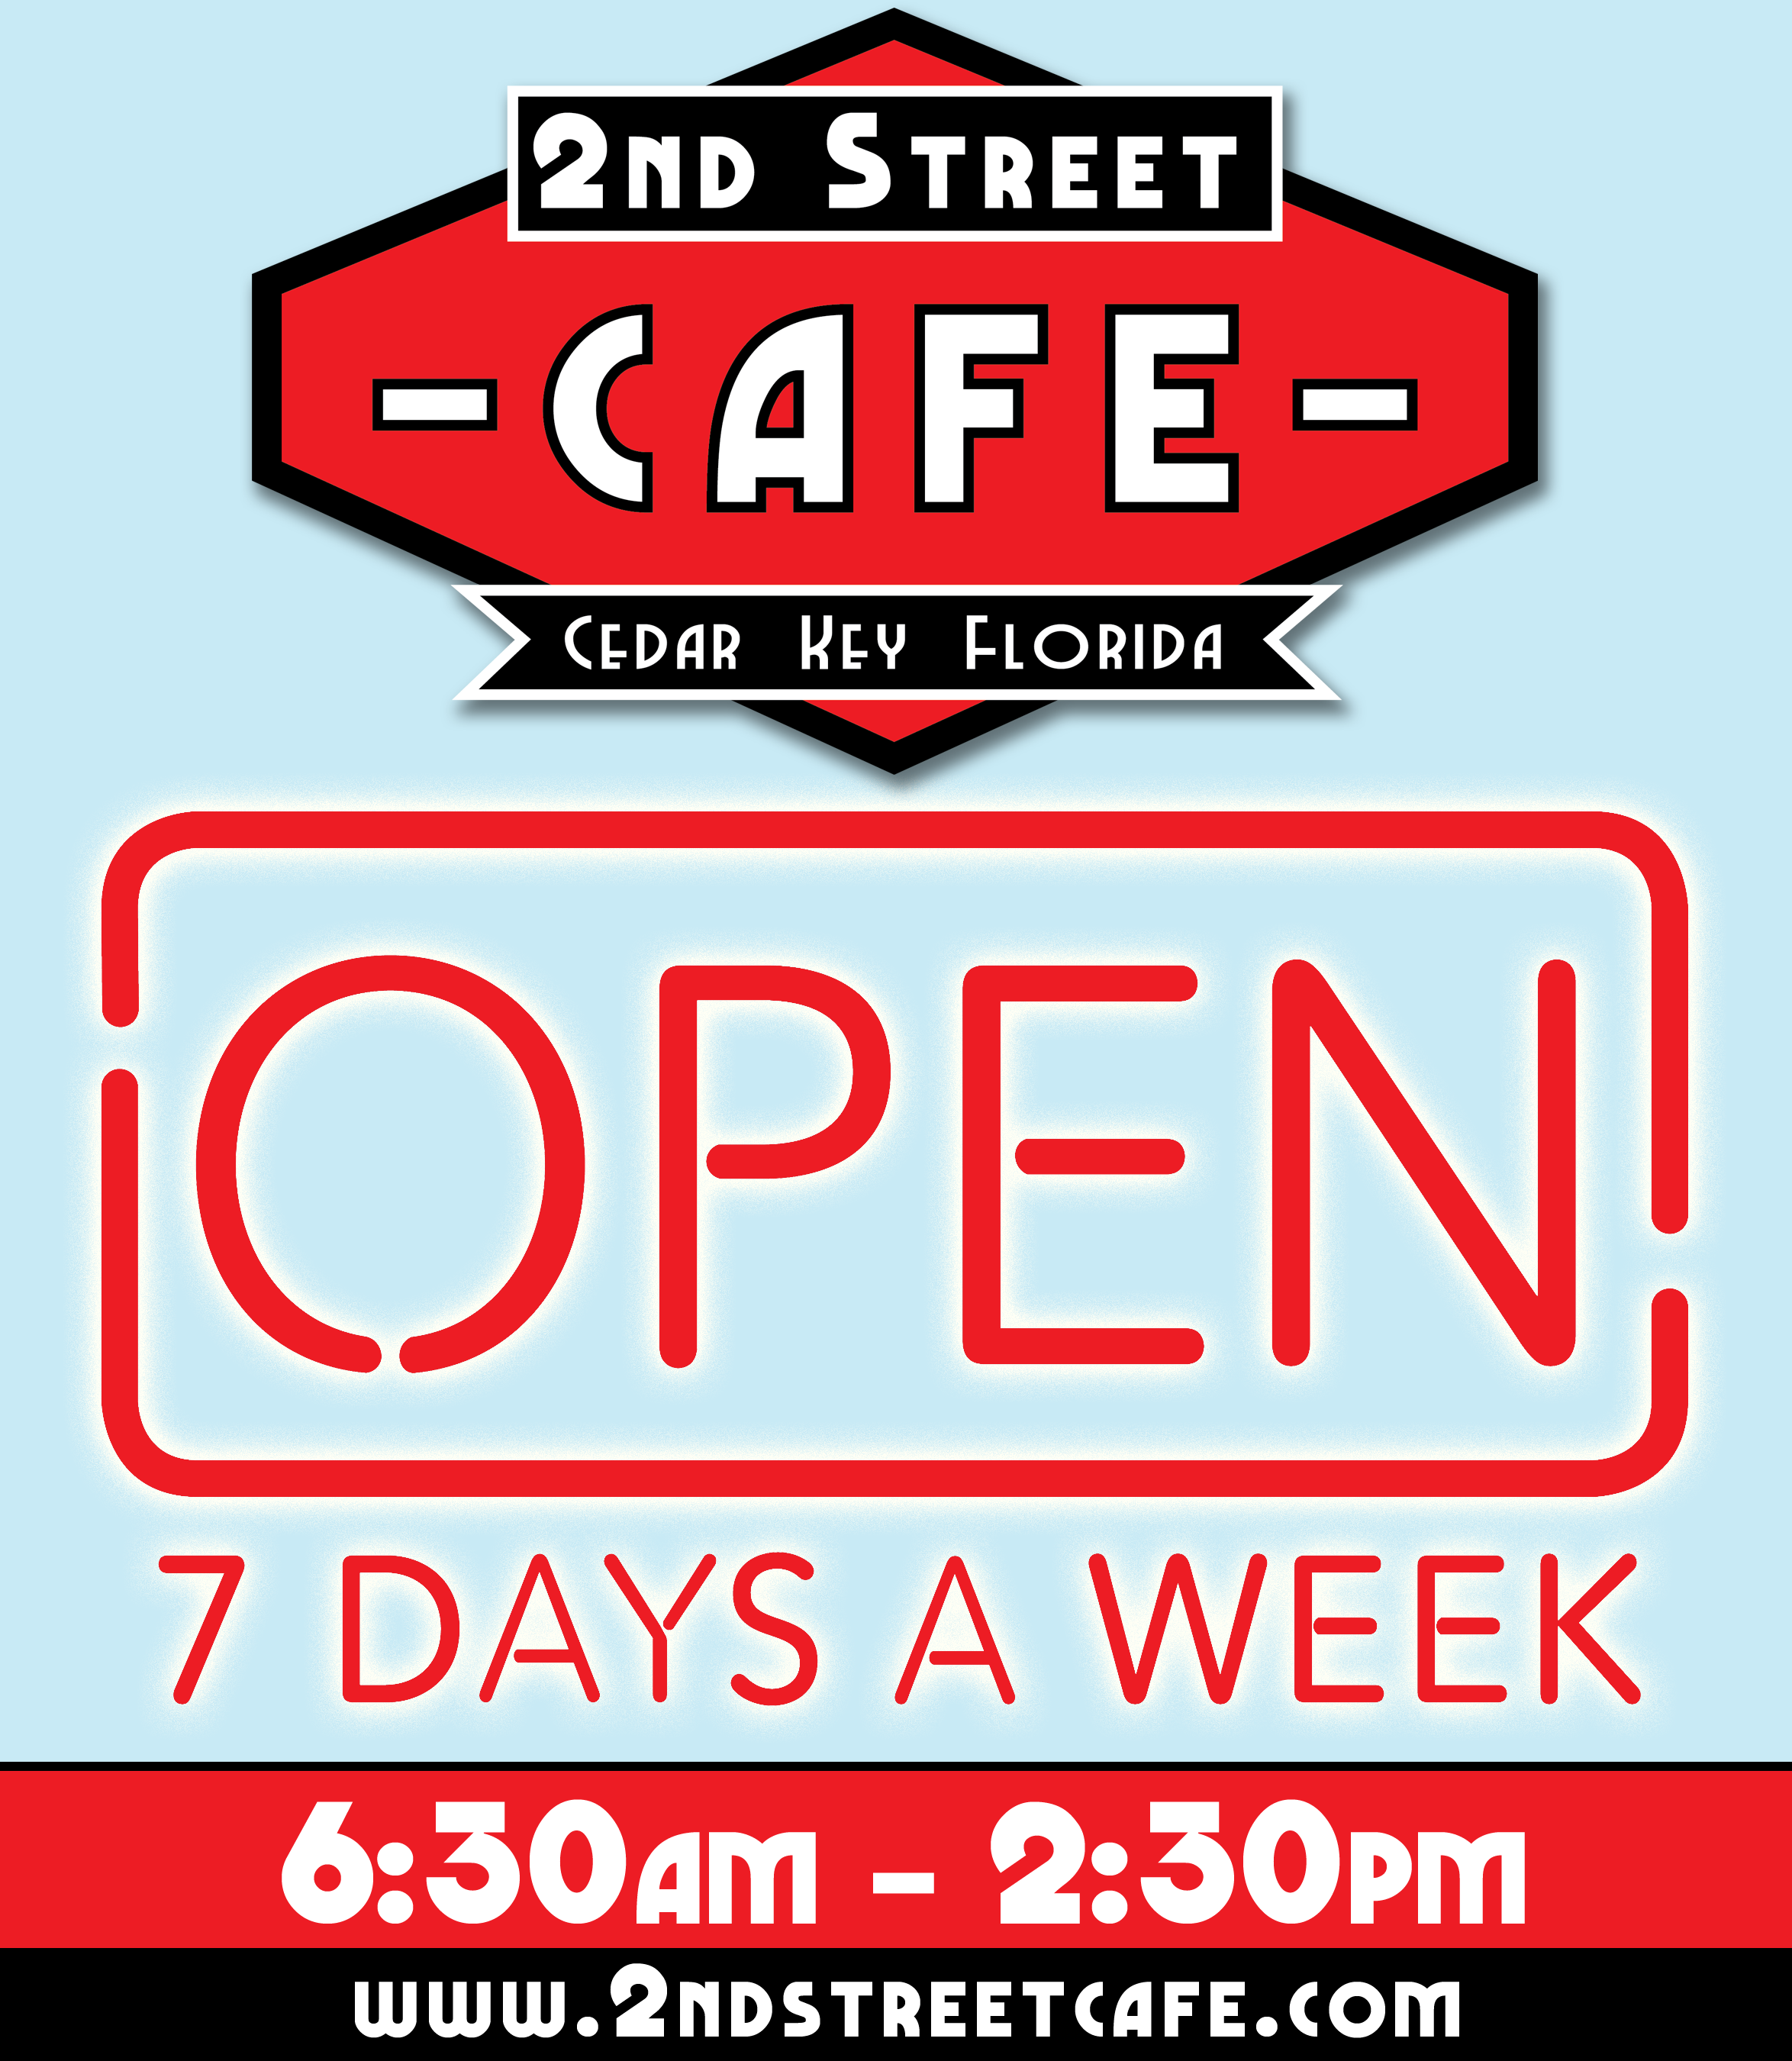 2nd Street Cafe - open 7 Days